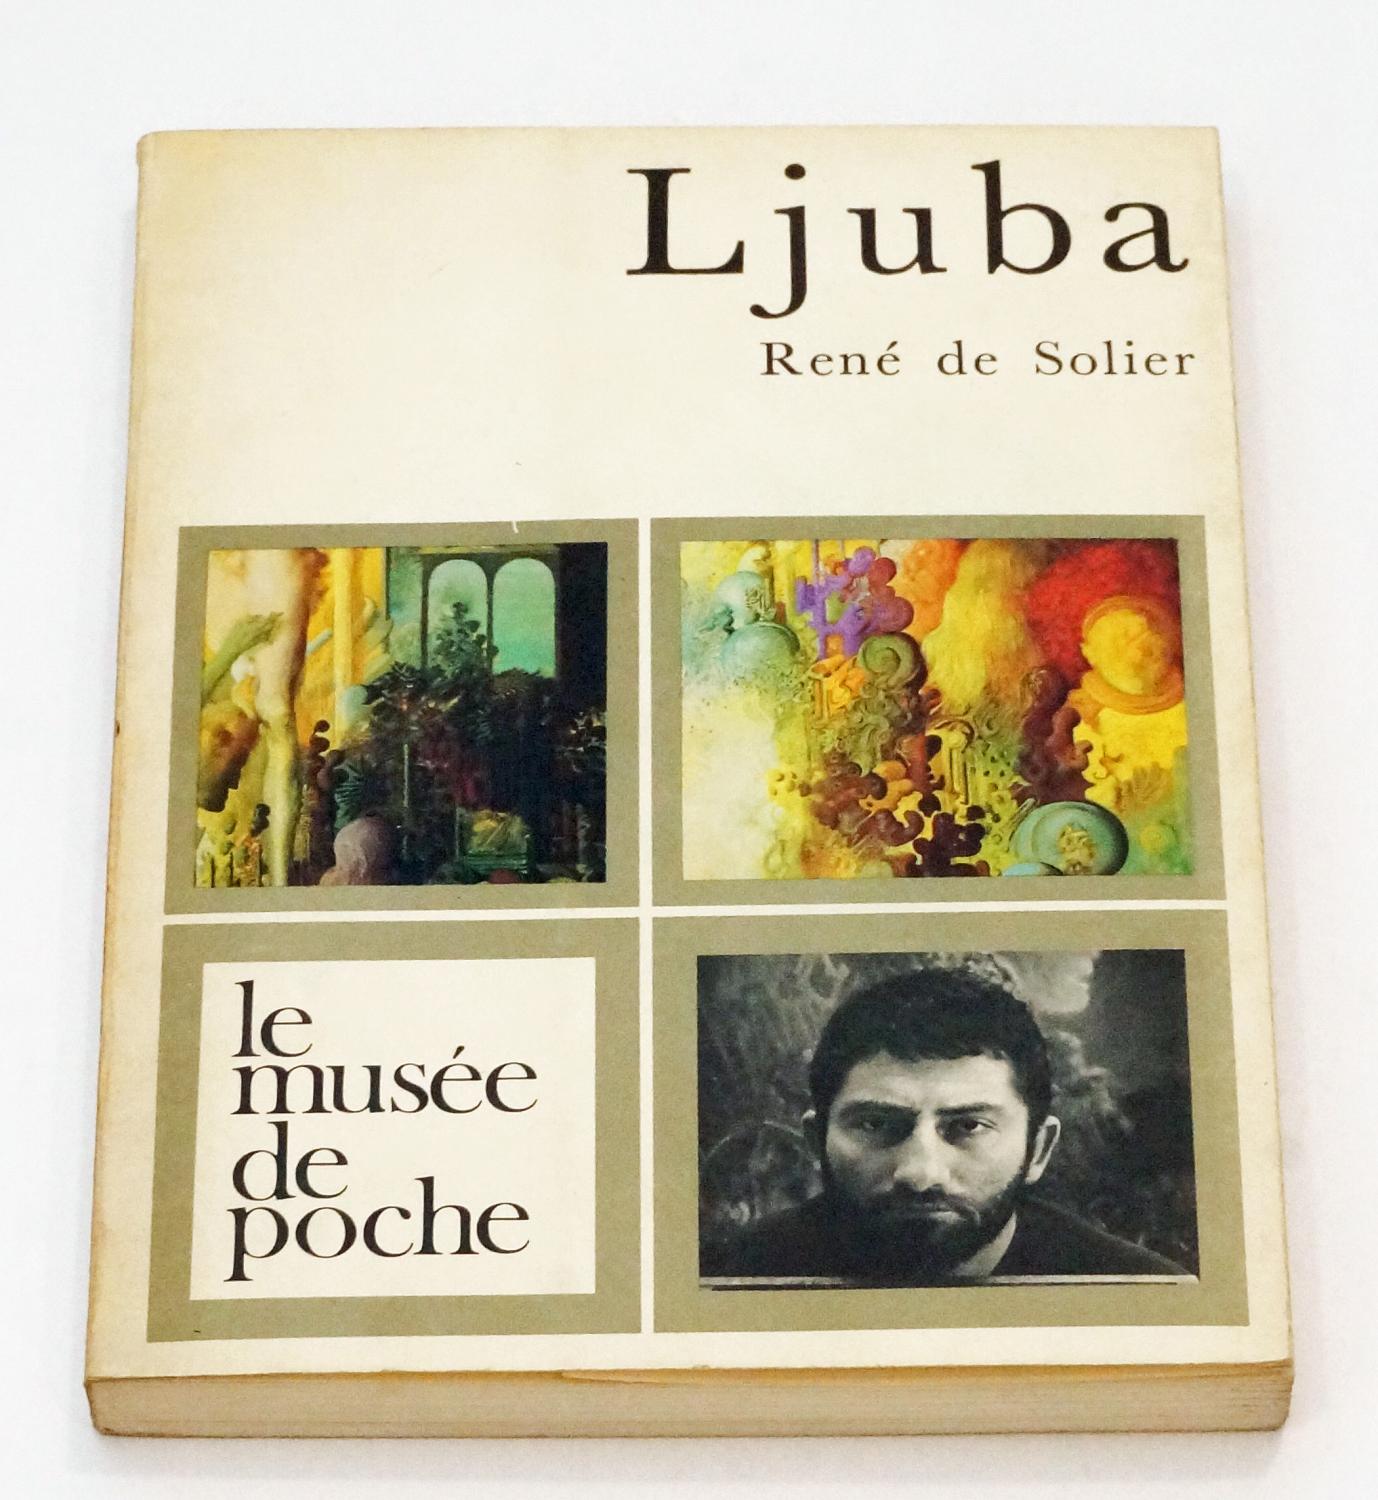 René de Solier, Ljuba (Paris, Le Musée de Poche, 1971)